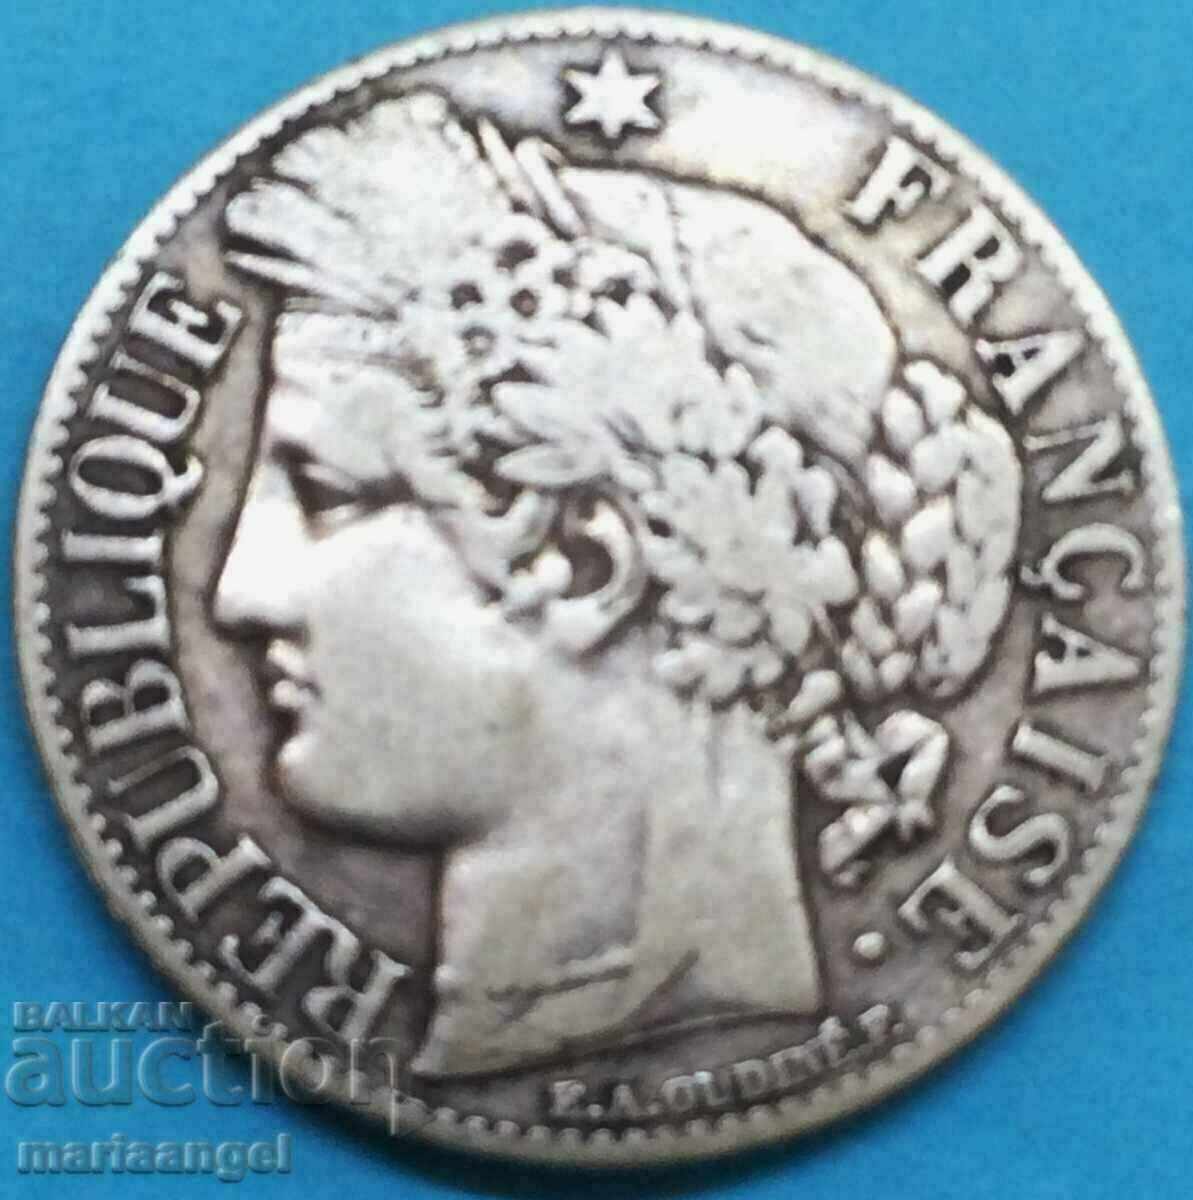 Franța 1 Franc 1884 Mariana Argint